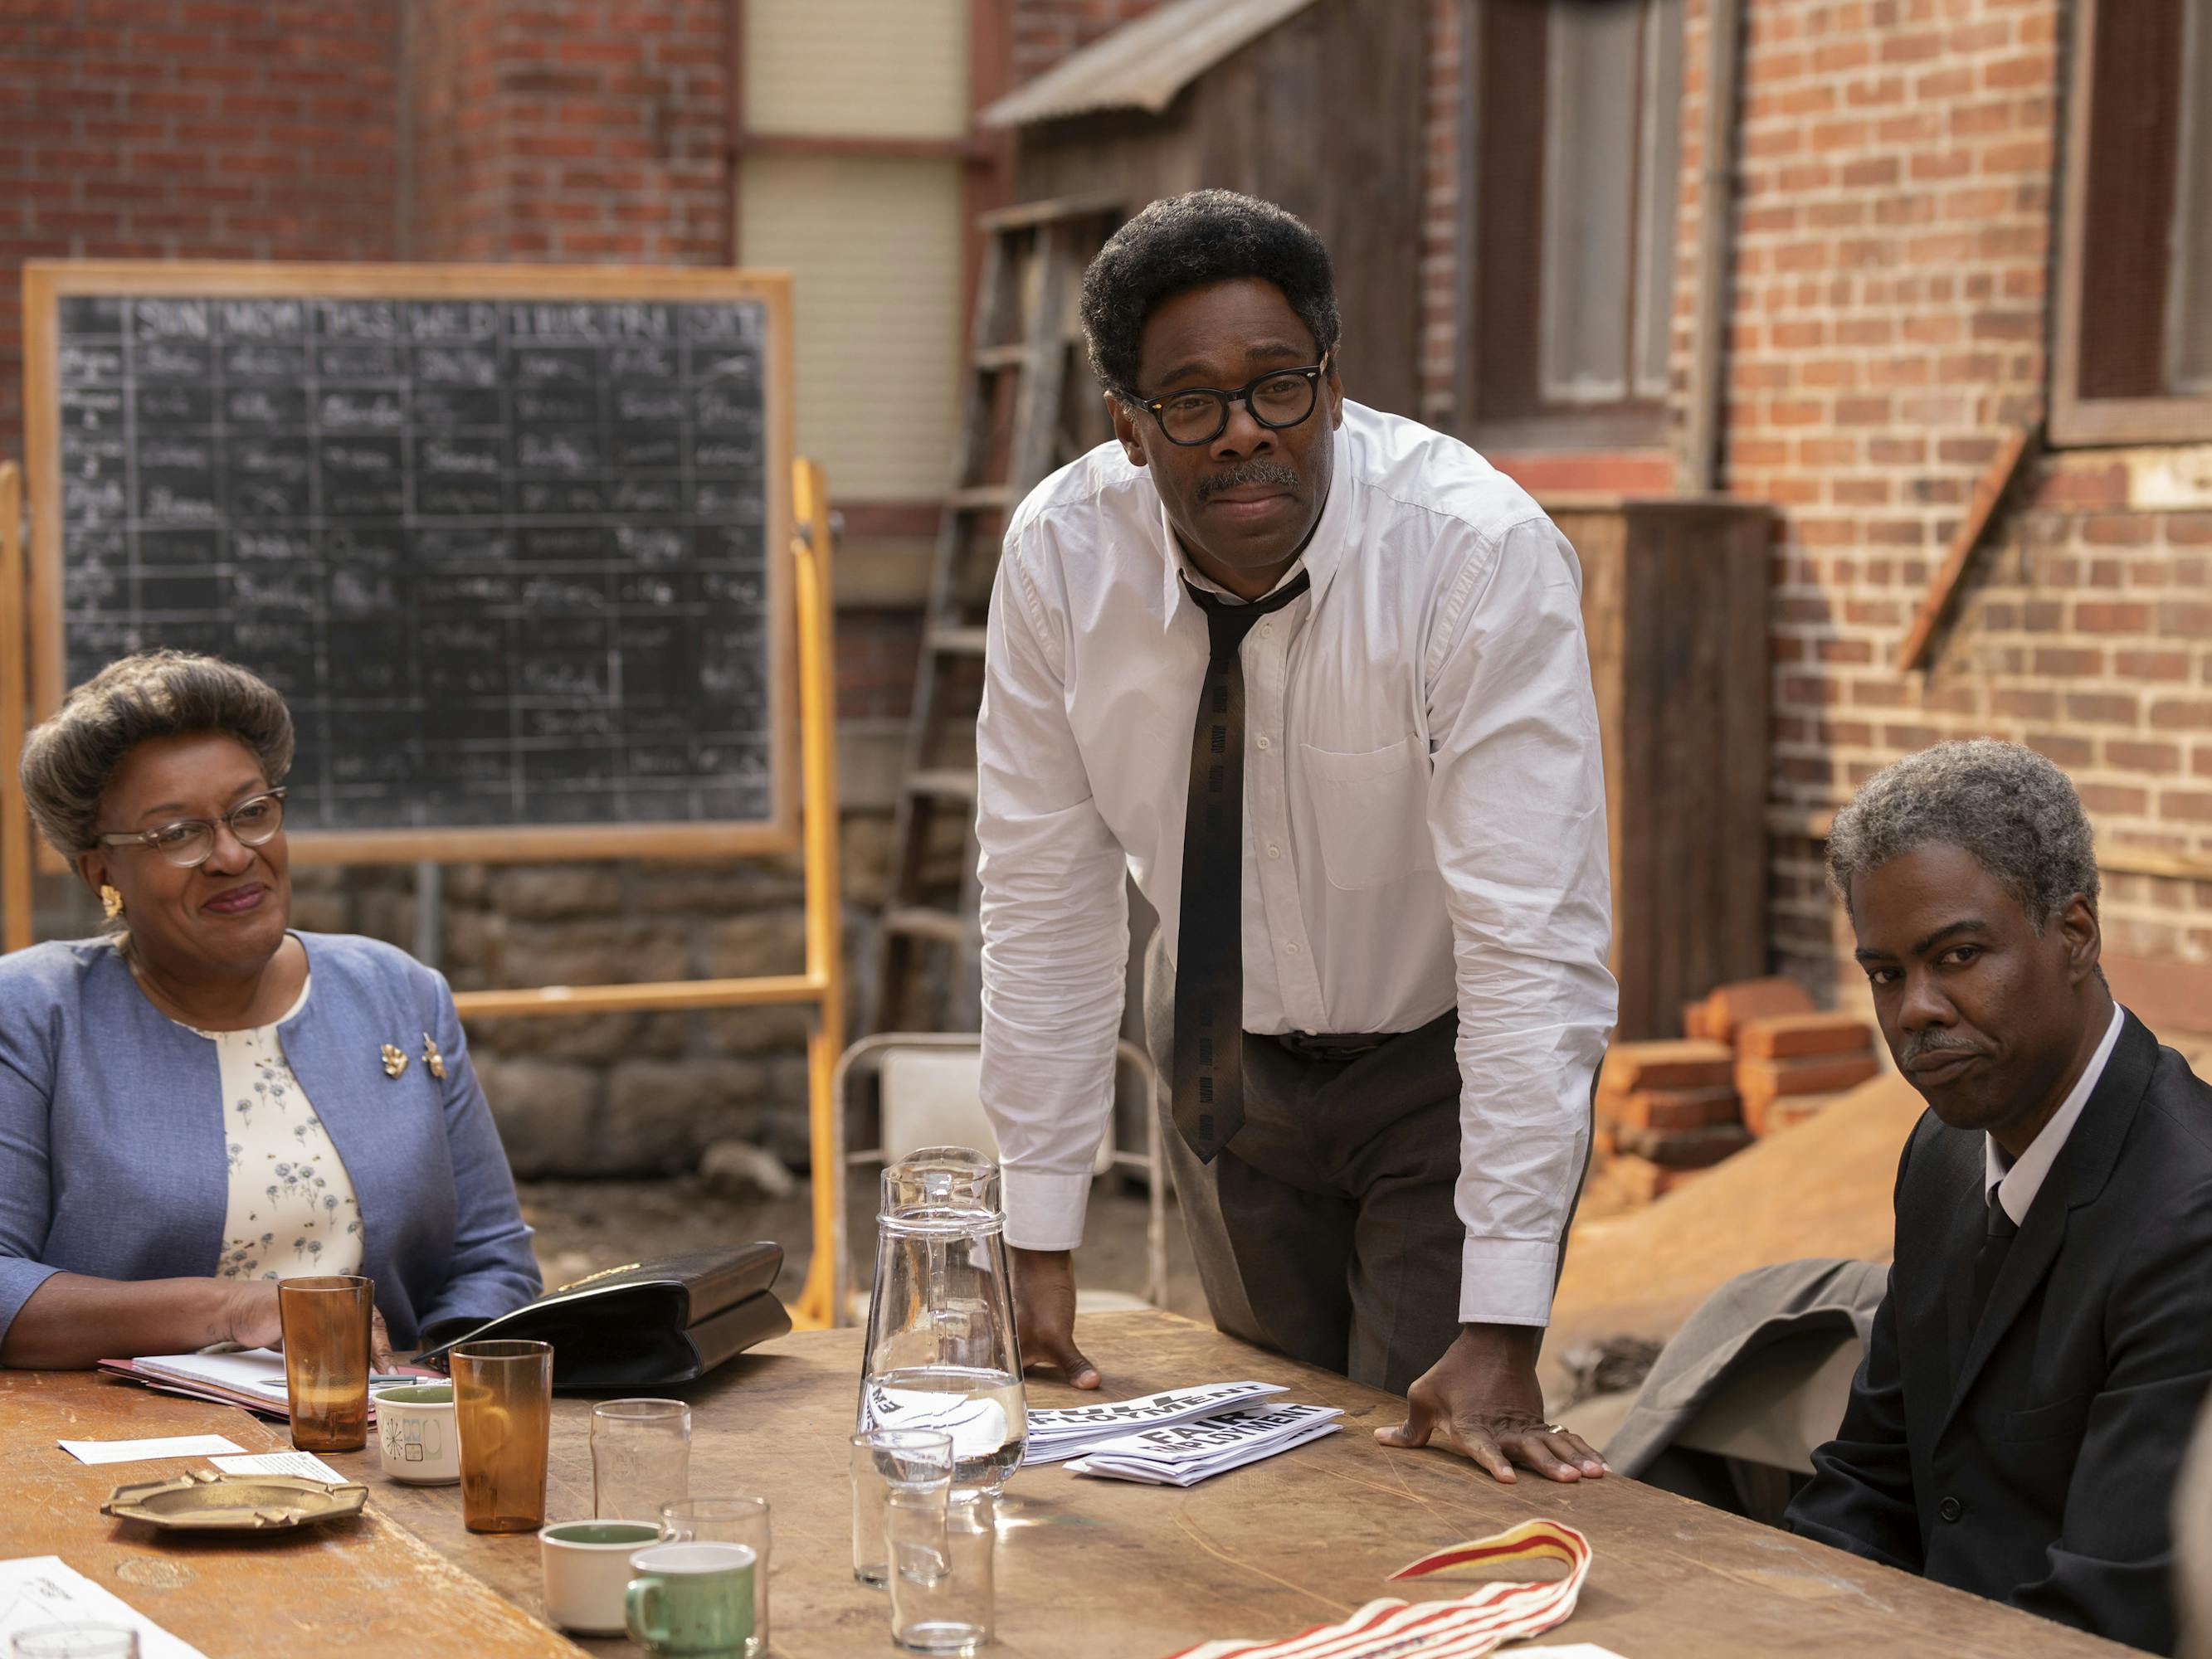 Bayard Rustin (Colman Domingo) and Roy Wilkins (Chris Rock) strategize around a table.